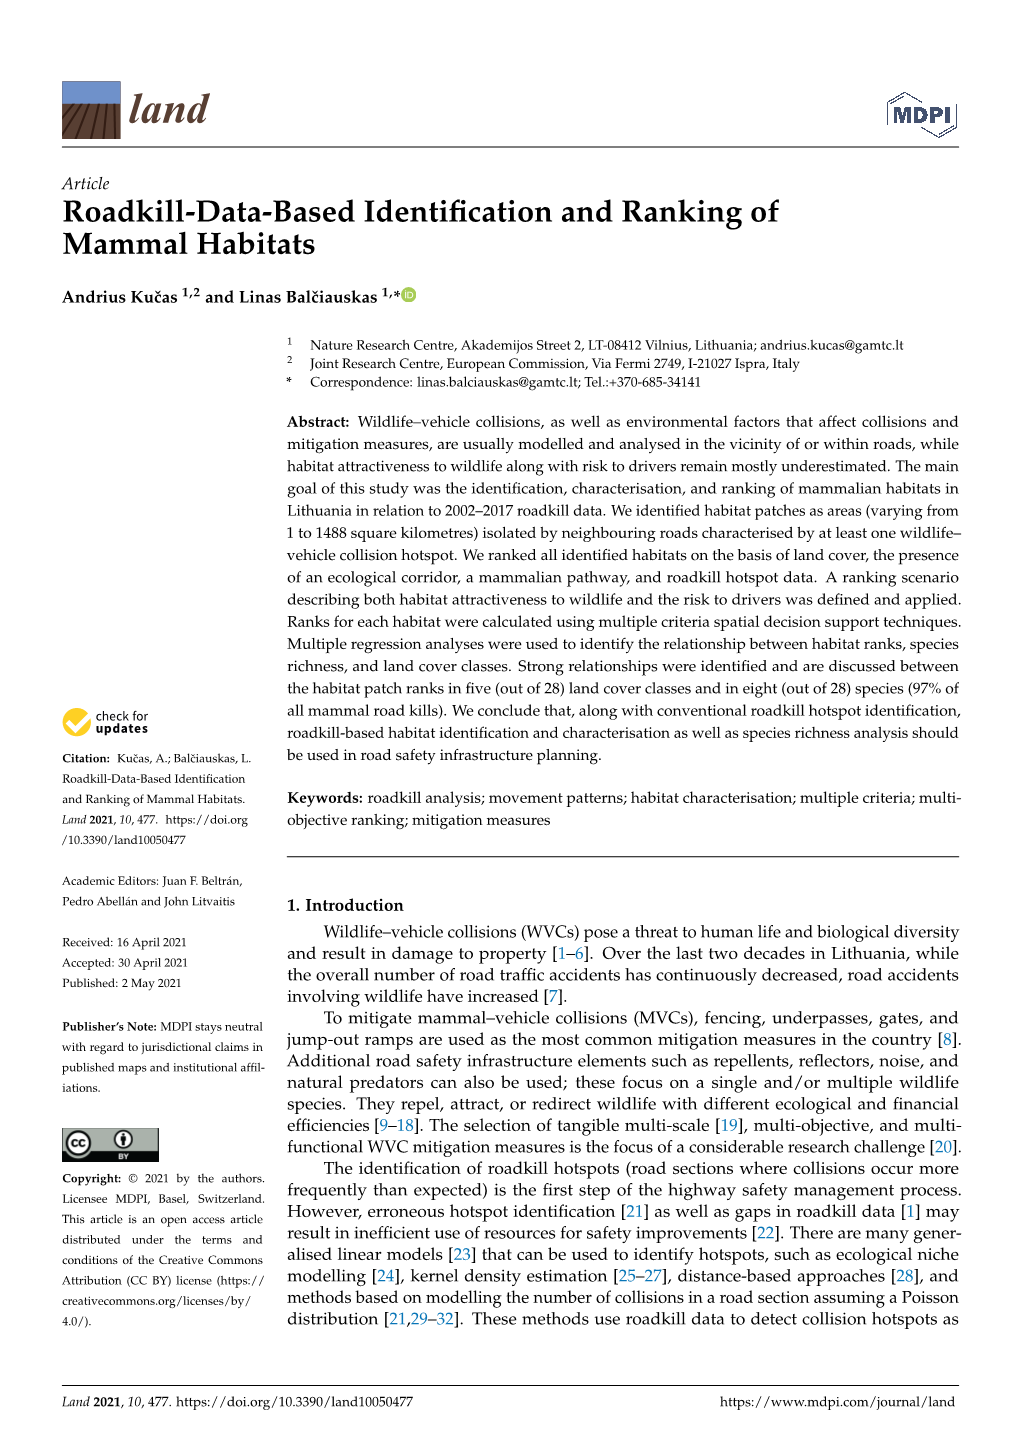 Roadkill-Data-Based Identification and Ranking of Mammal Habitats